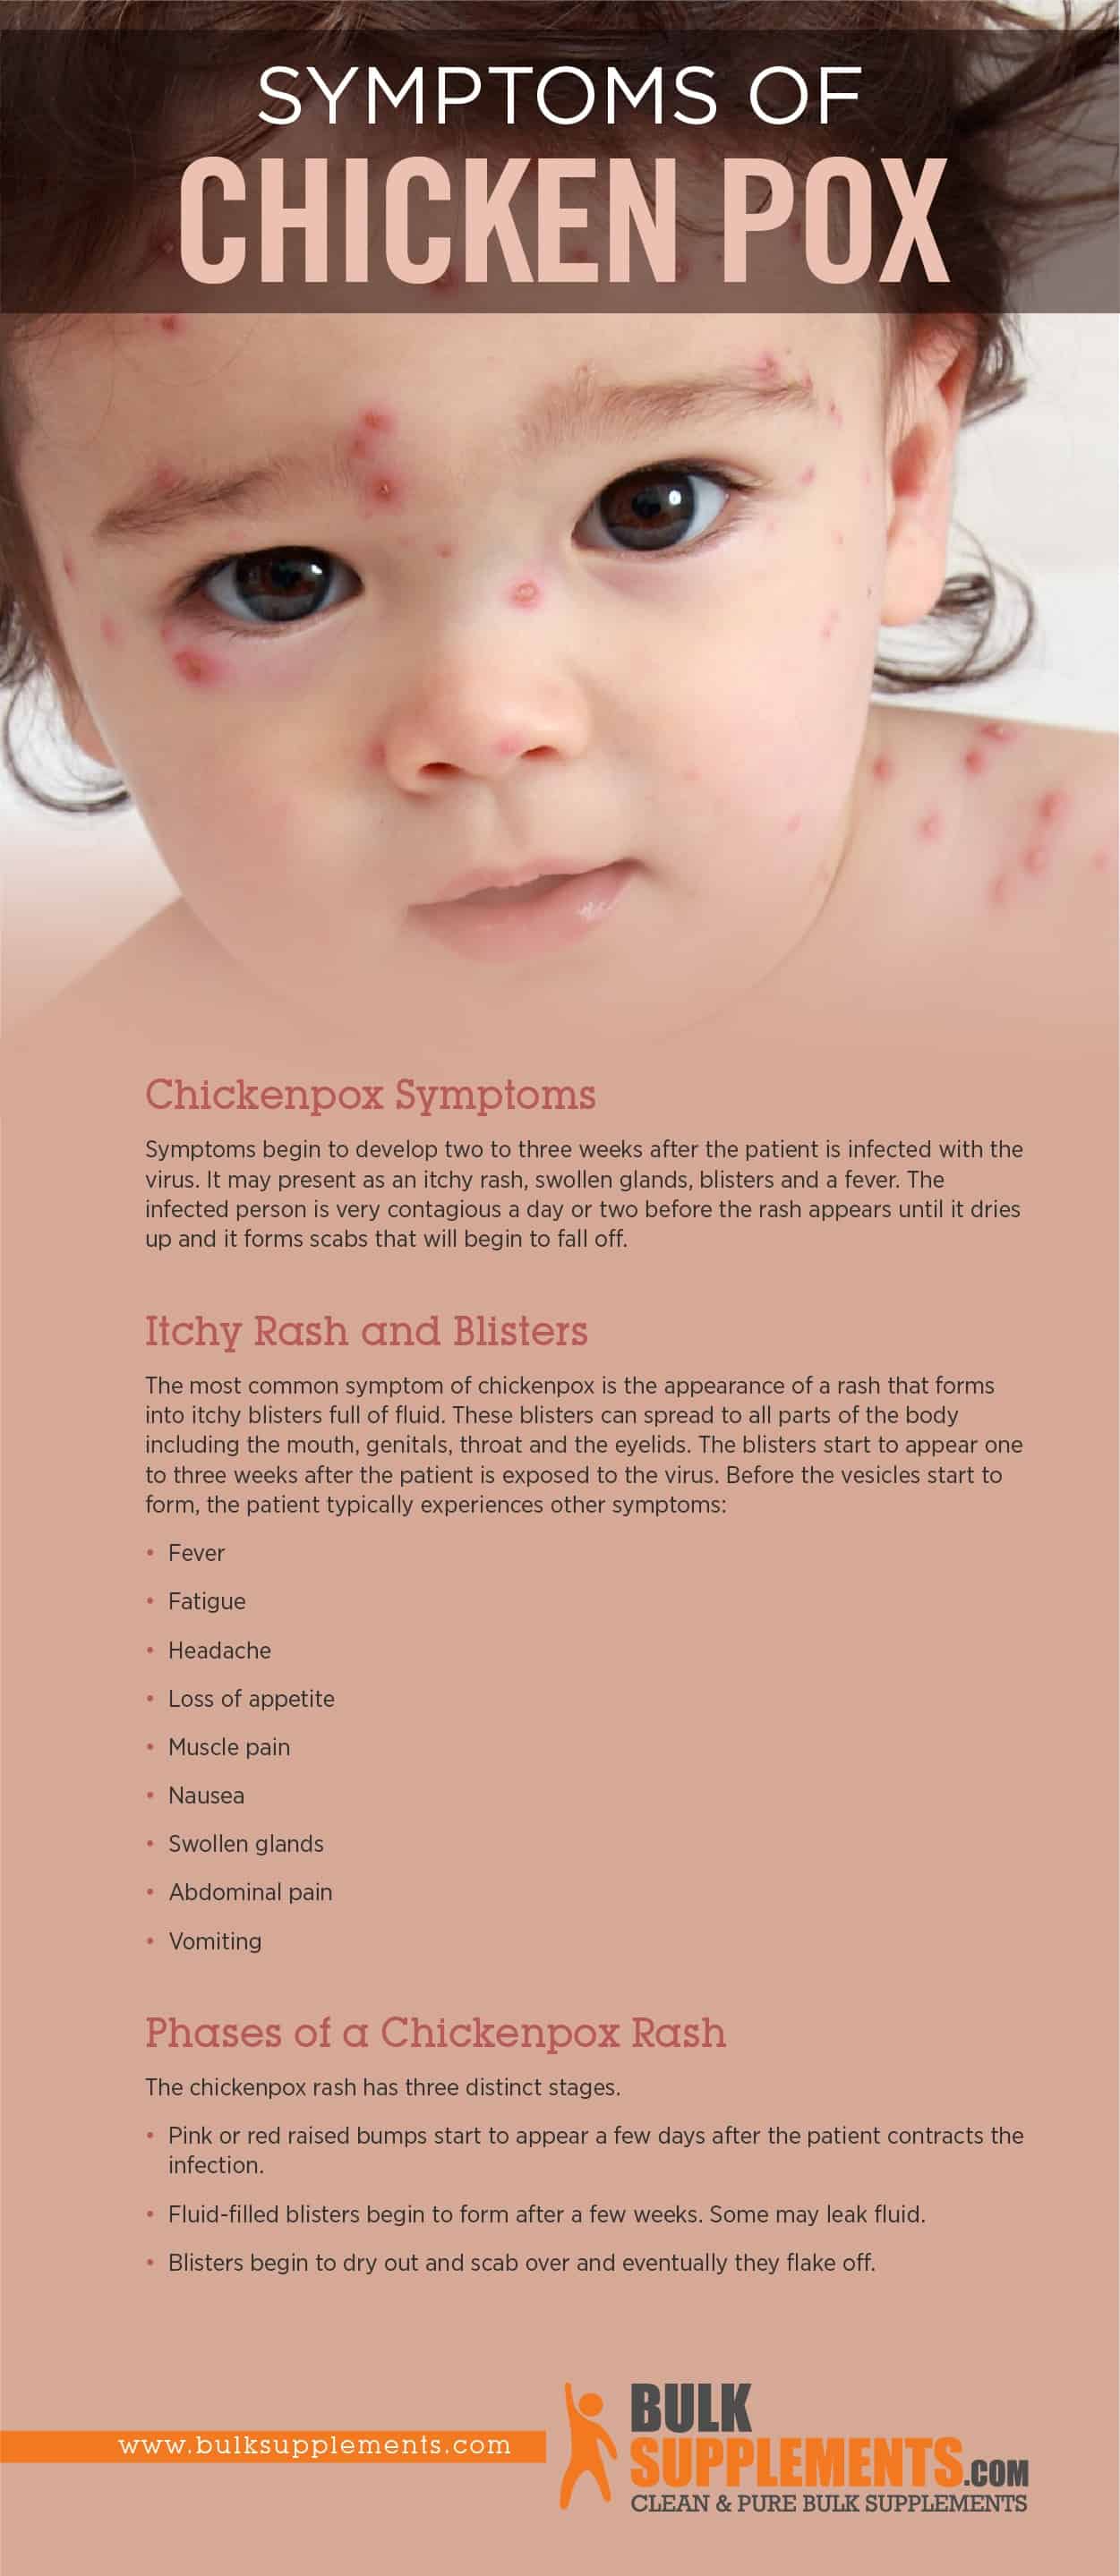 Symptoms of Chicken Pox